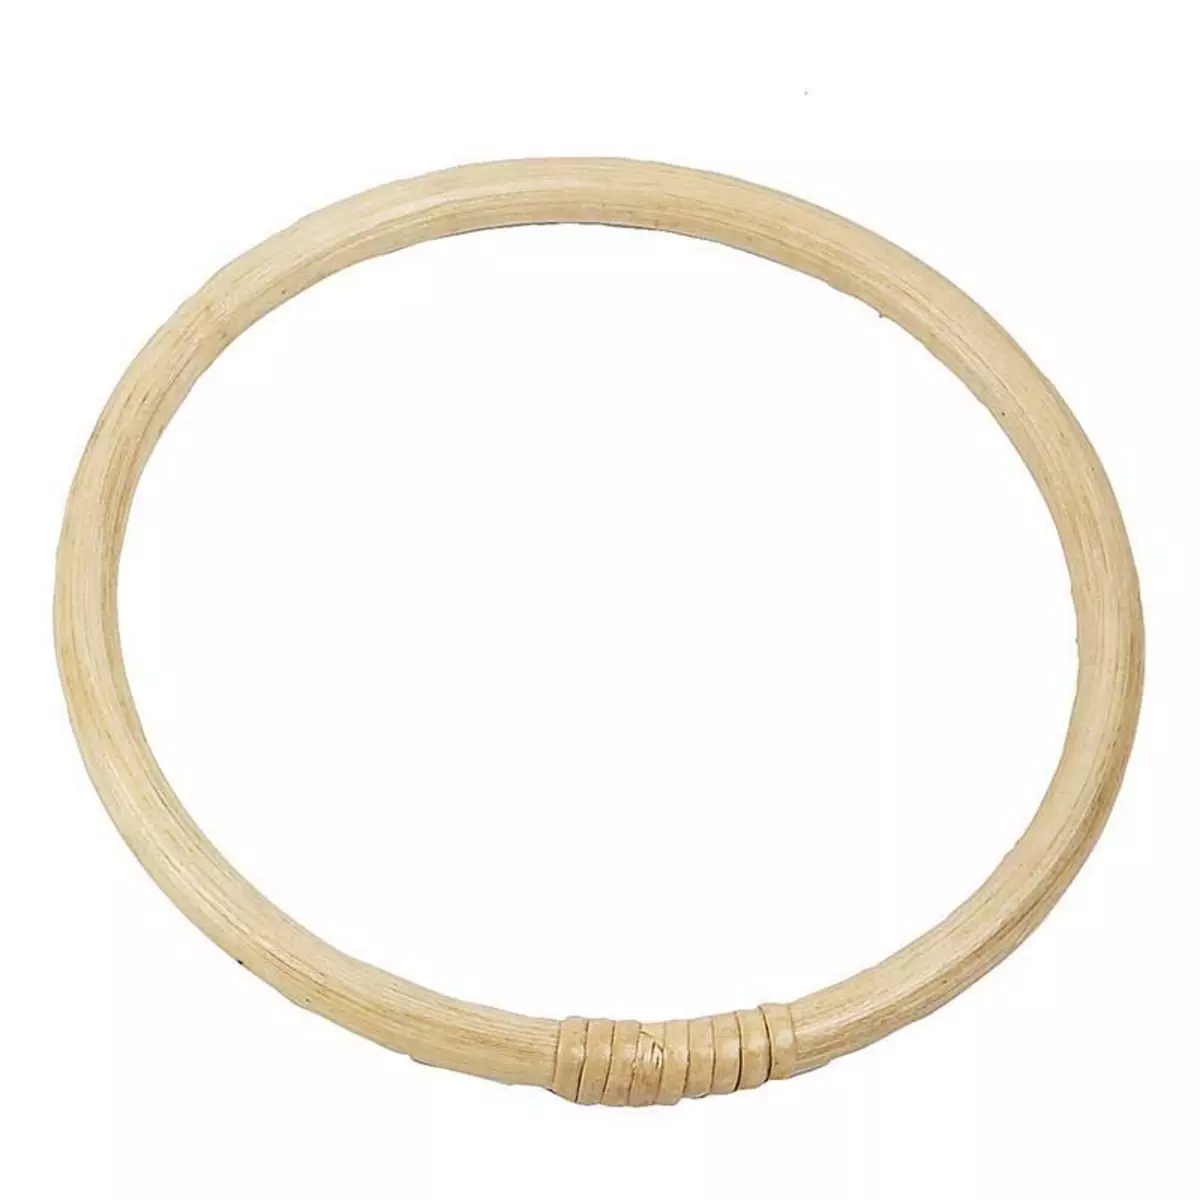  Anse de sac anneau en bambou - Ø 17 cm